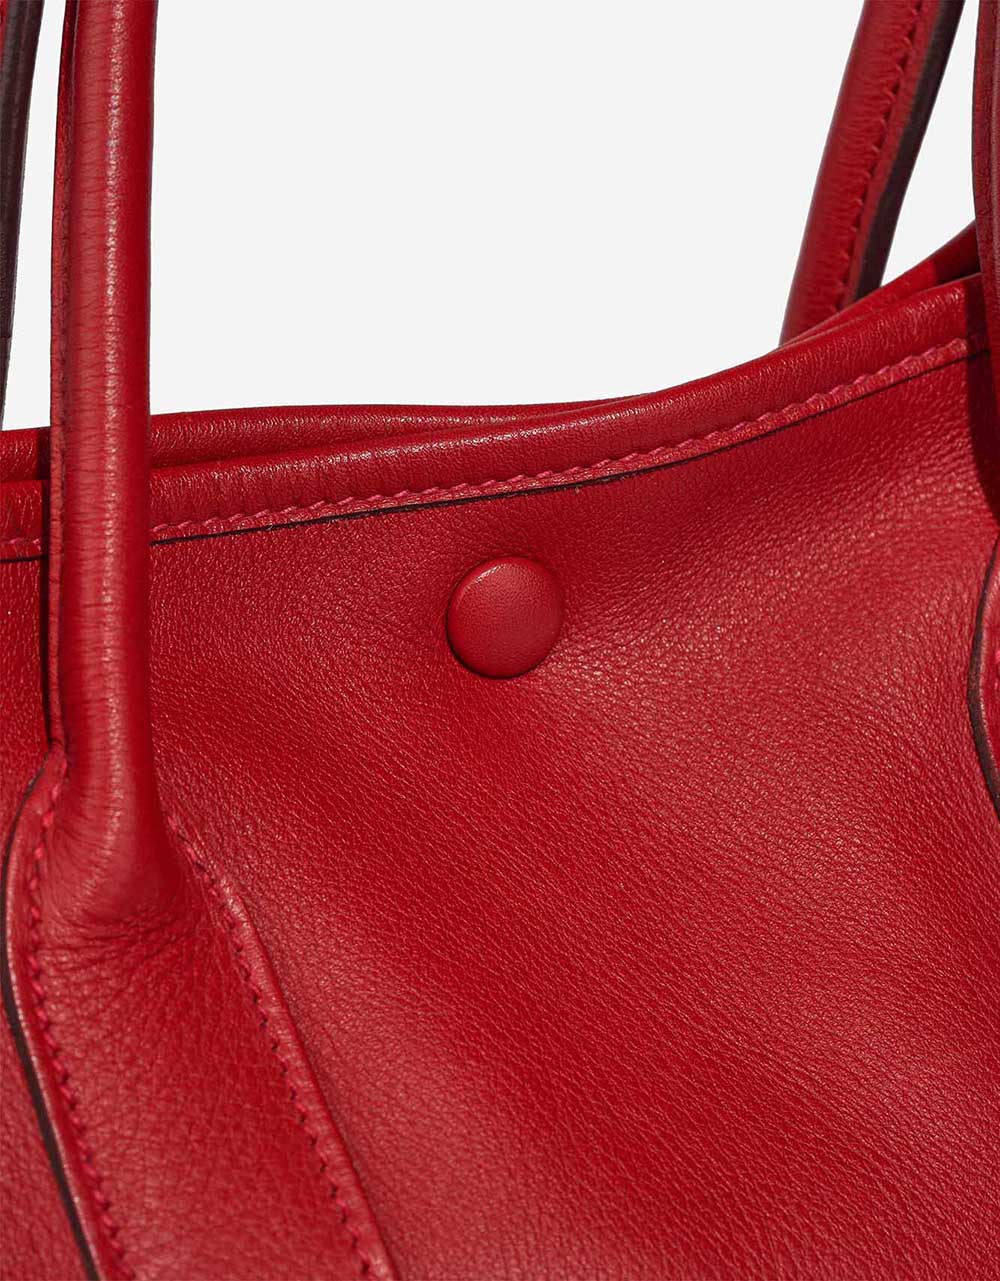 Hermès Garden Party 30 Evercolor Rouge Vif Closing System | Sell your designer bag